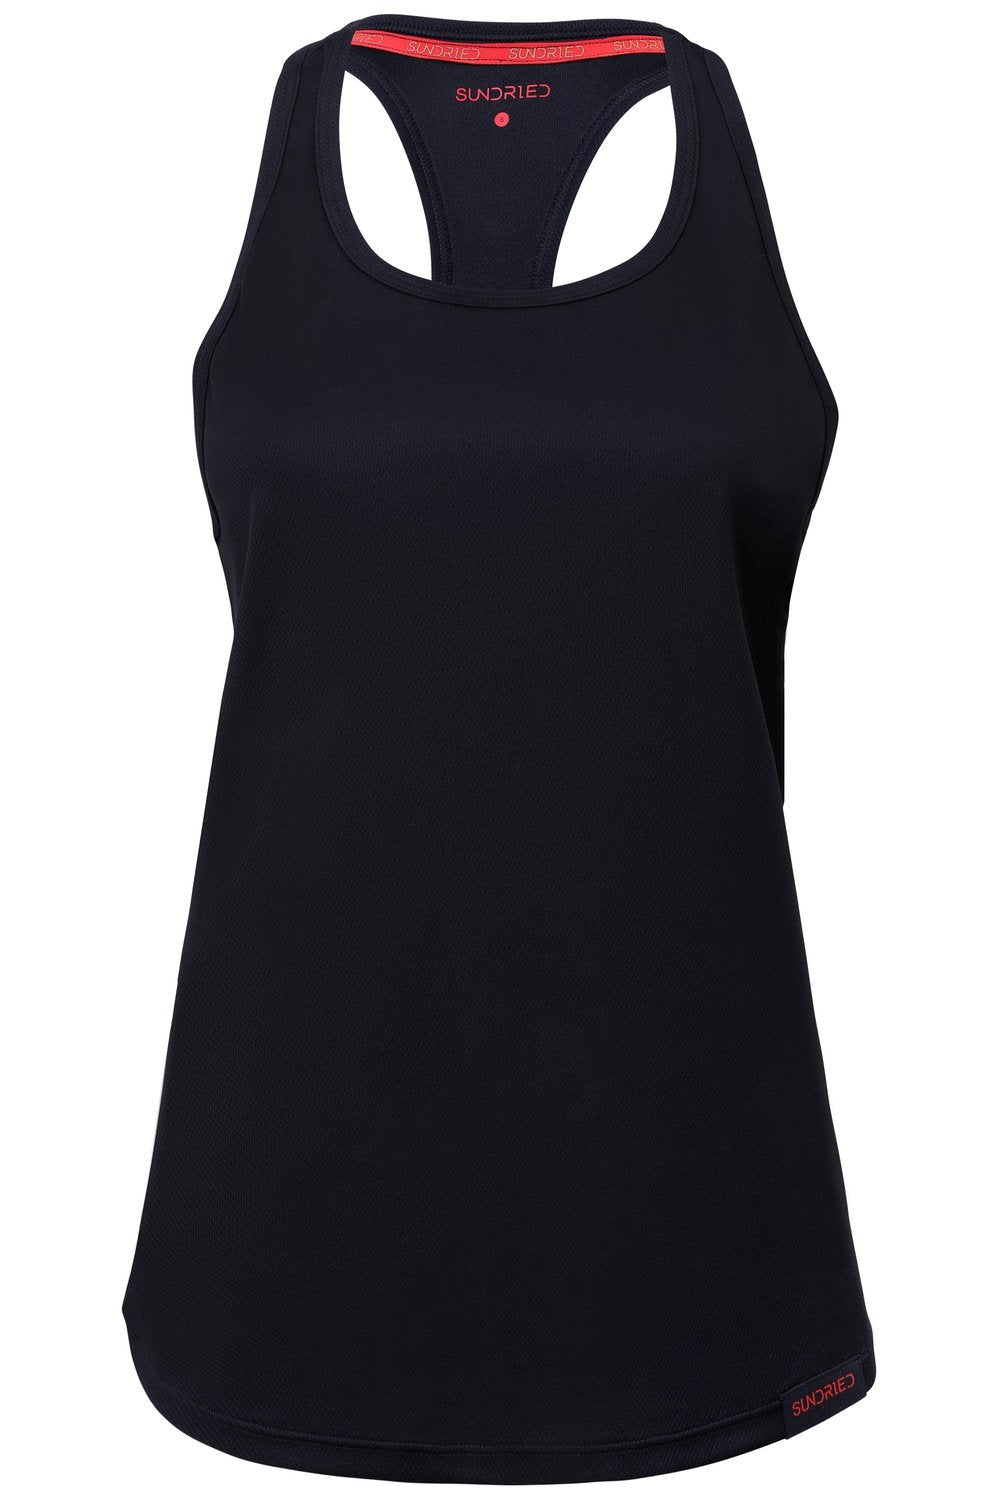 Sundried Piz Fora Women's Recycled Training Vest Vest XS Black SD0054 XS Noir Activewear